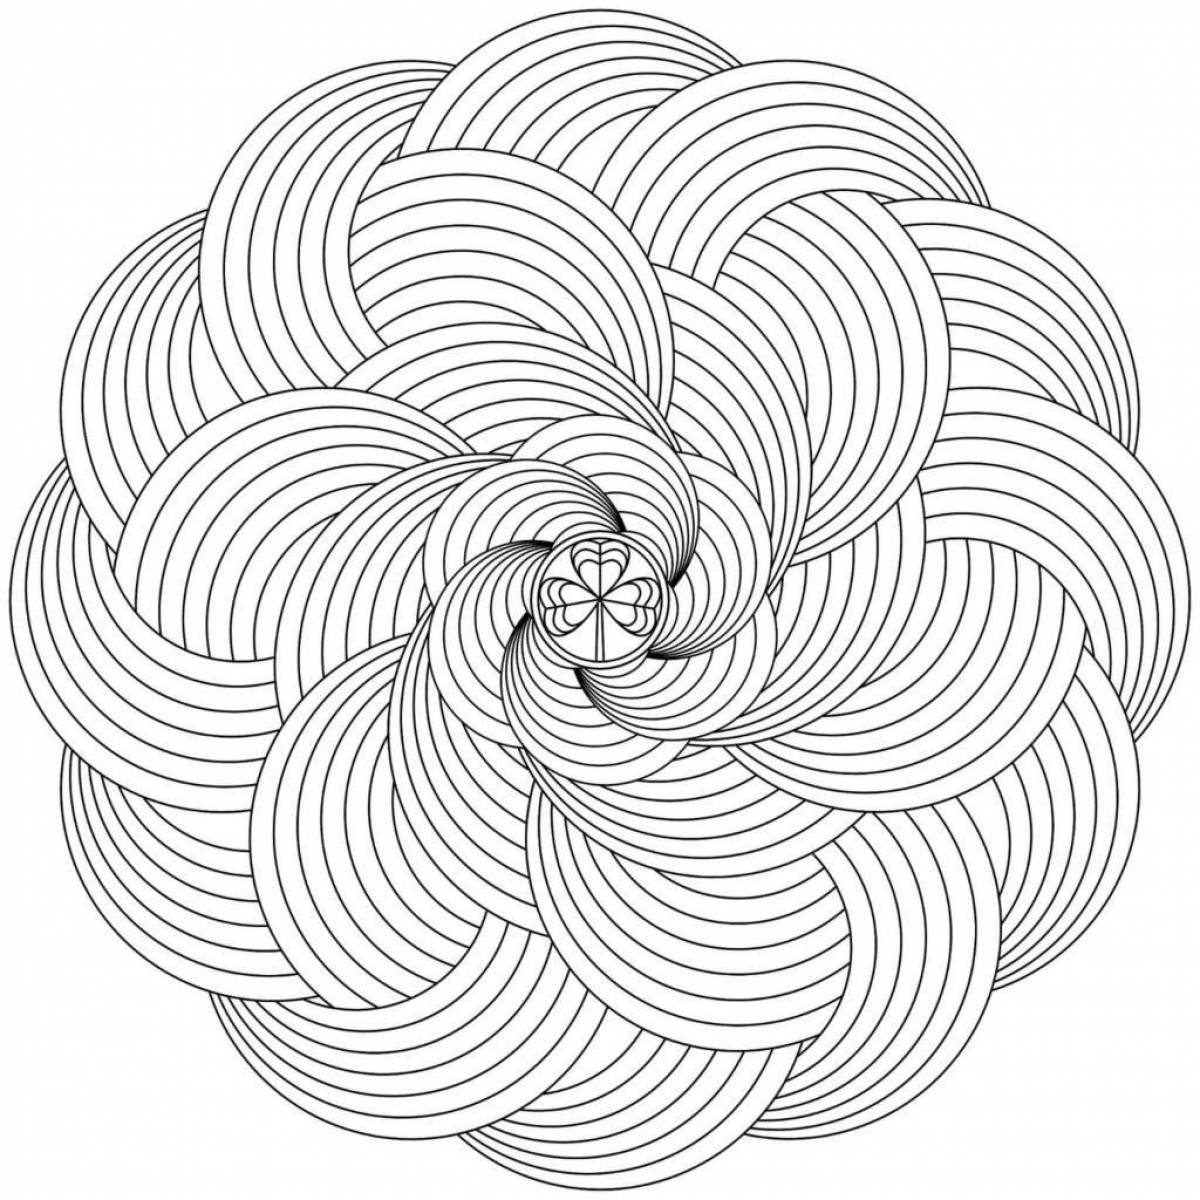 Artistic circular spiral coloring